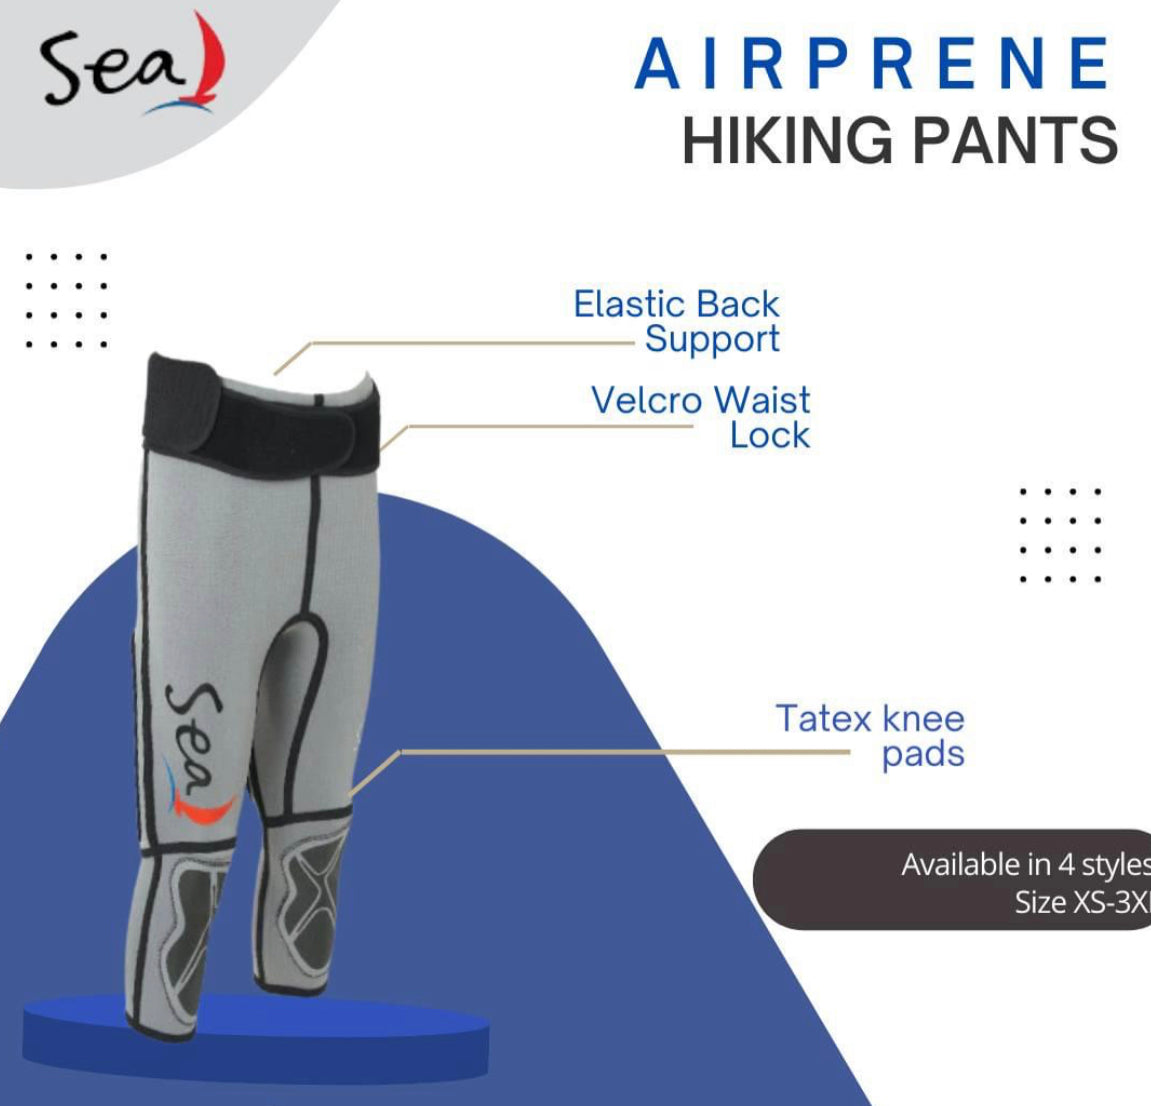 Sea Gear Airprene 3/4 Waist Lock Hiking Pants